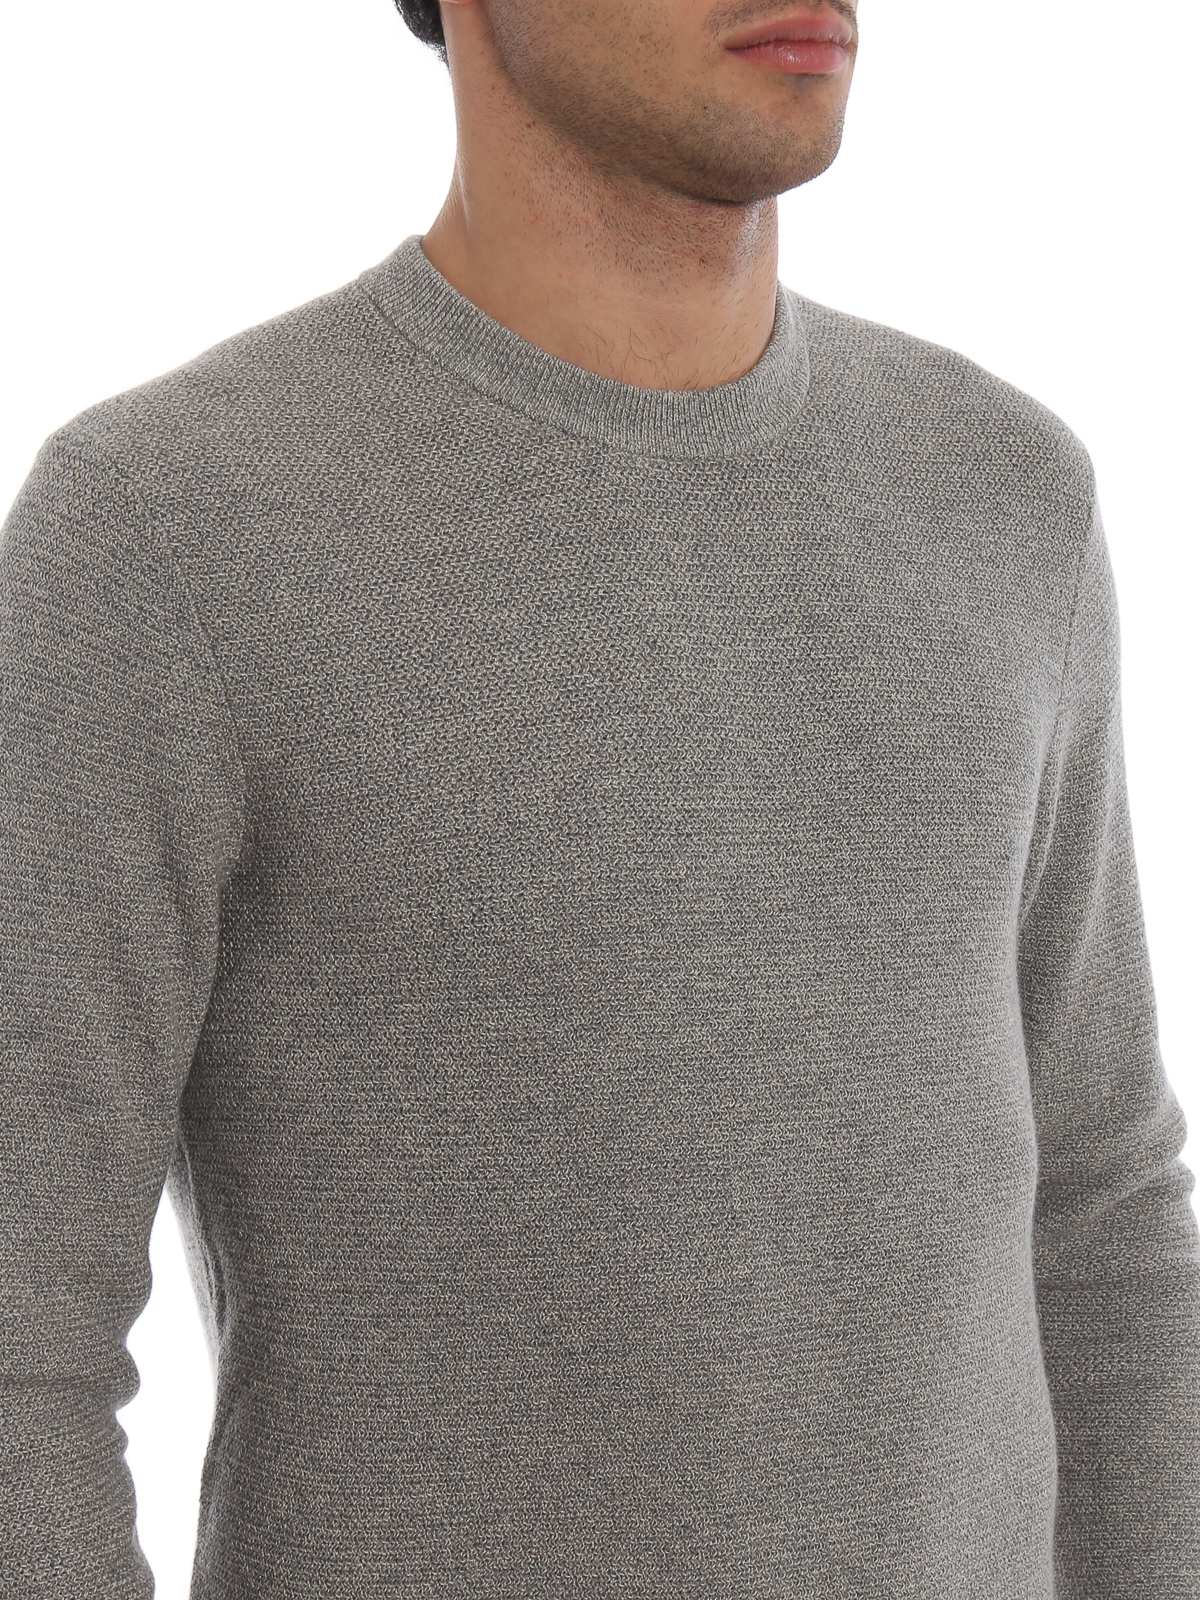 Shop Michael Kors Light Grey Soft Cotton And Wool Sweater